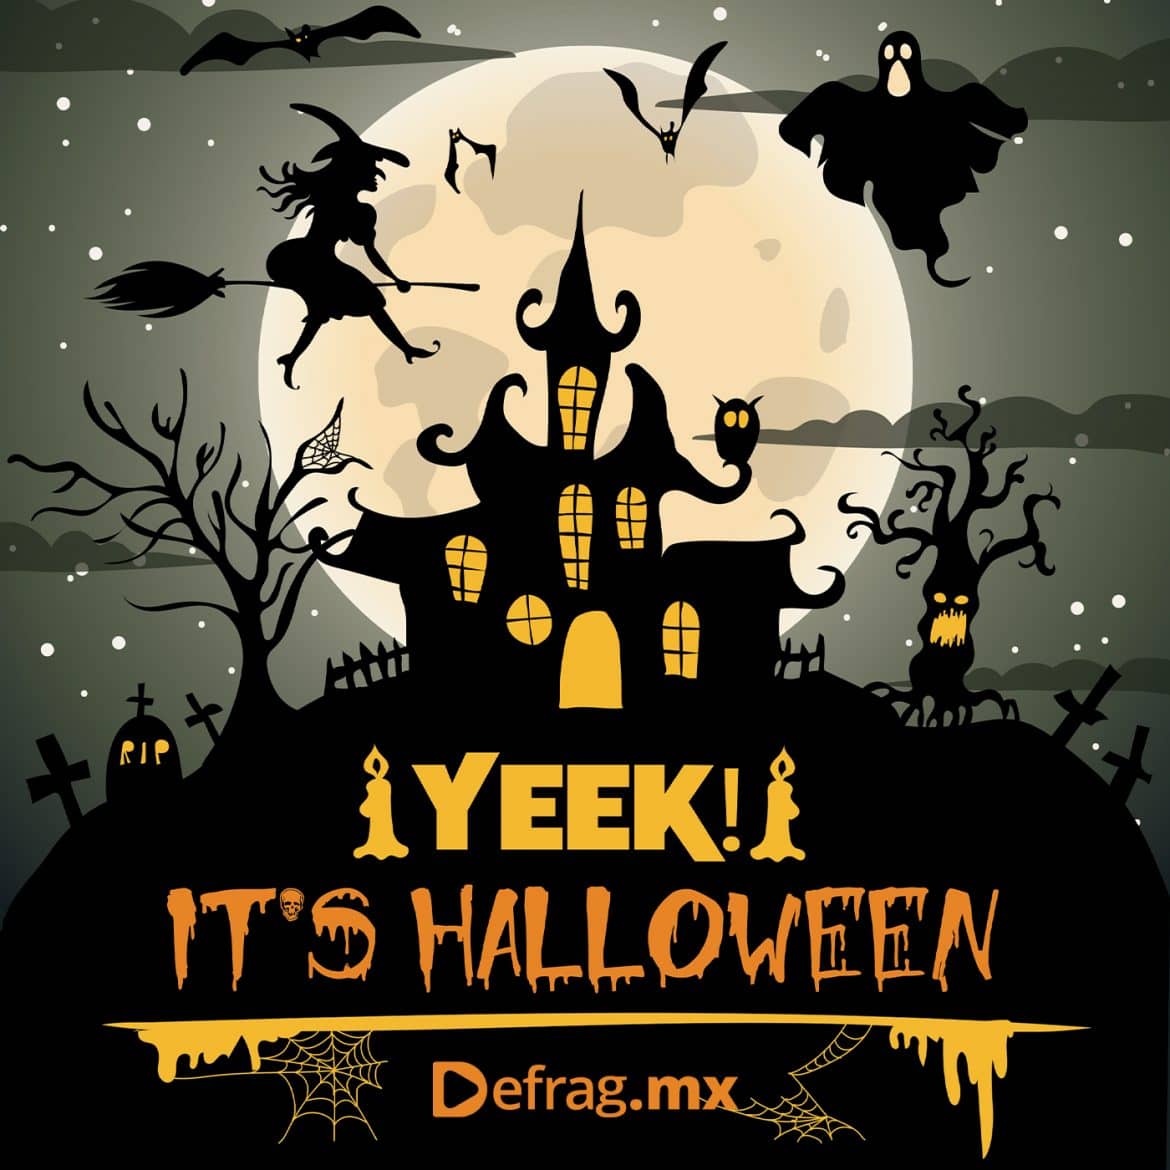 Defrag.mx Playlist Yeek! It's Halloween